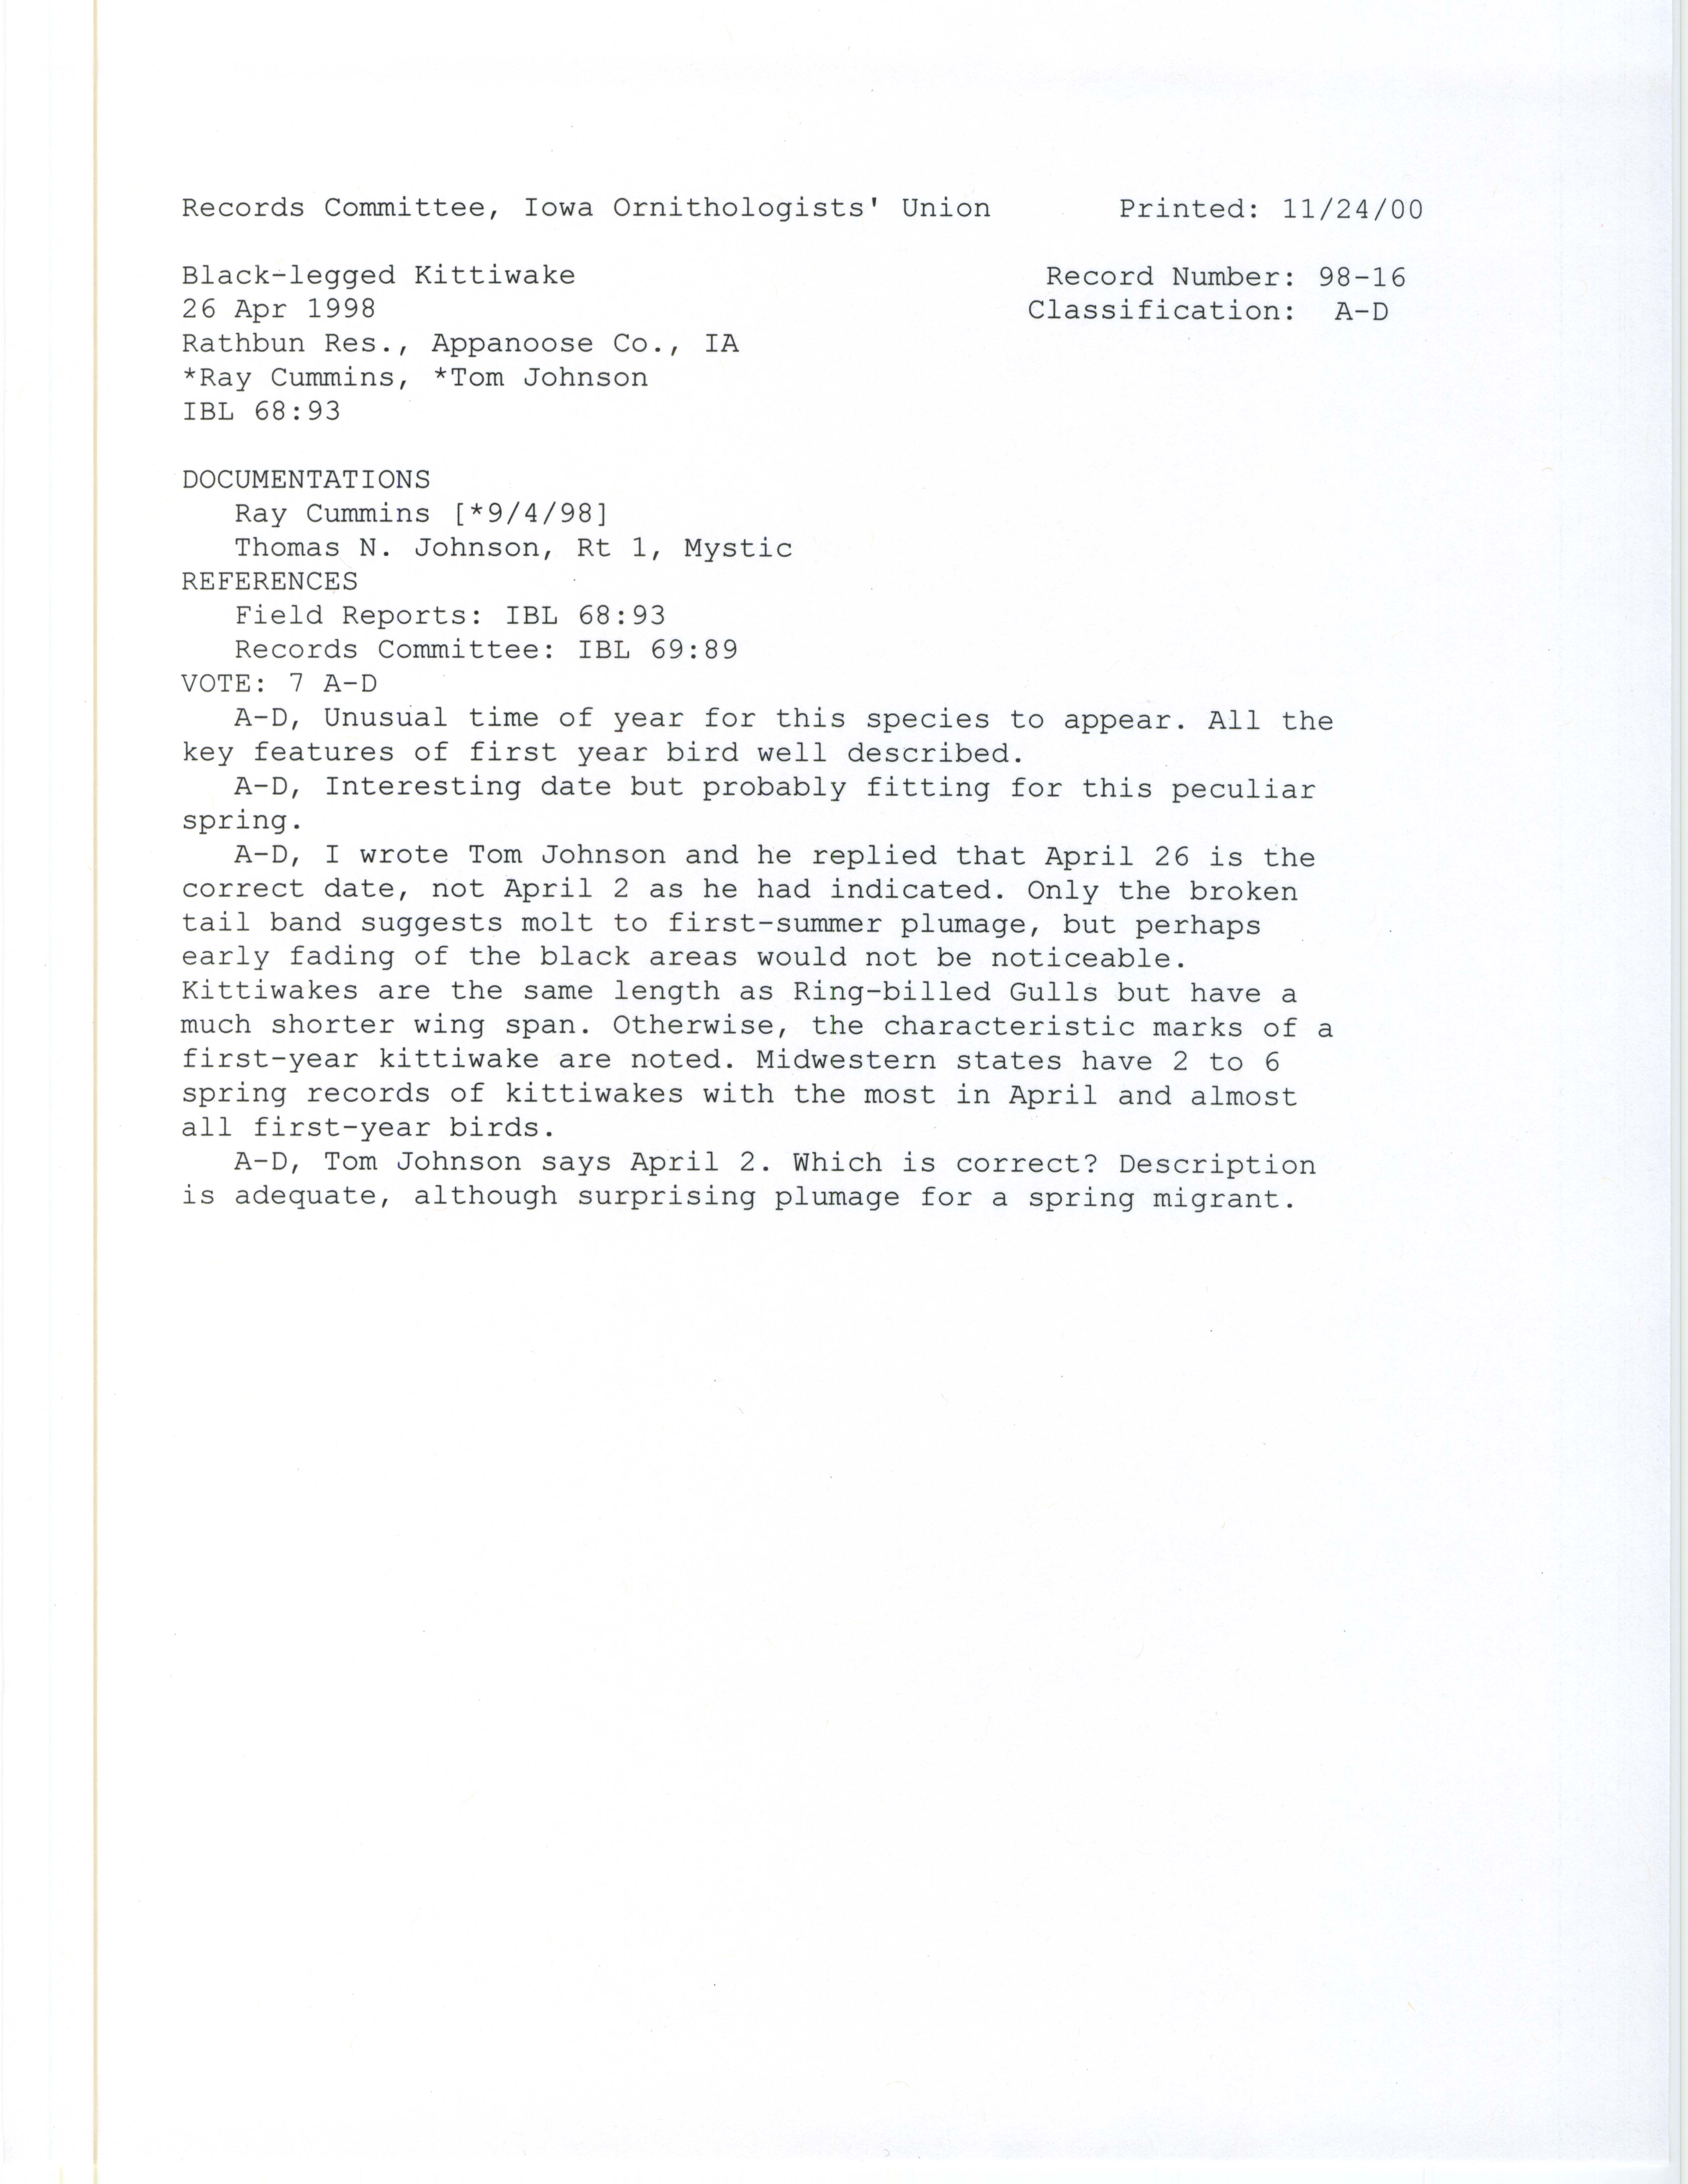 Records Committee review for rare bird sighting for Black-legged Kittiwake at Lake Rathbun, 1998